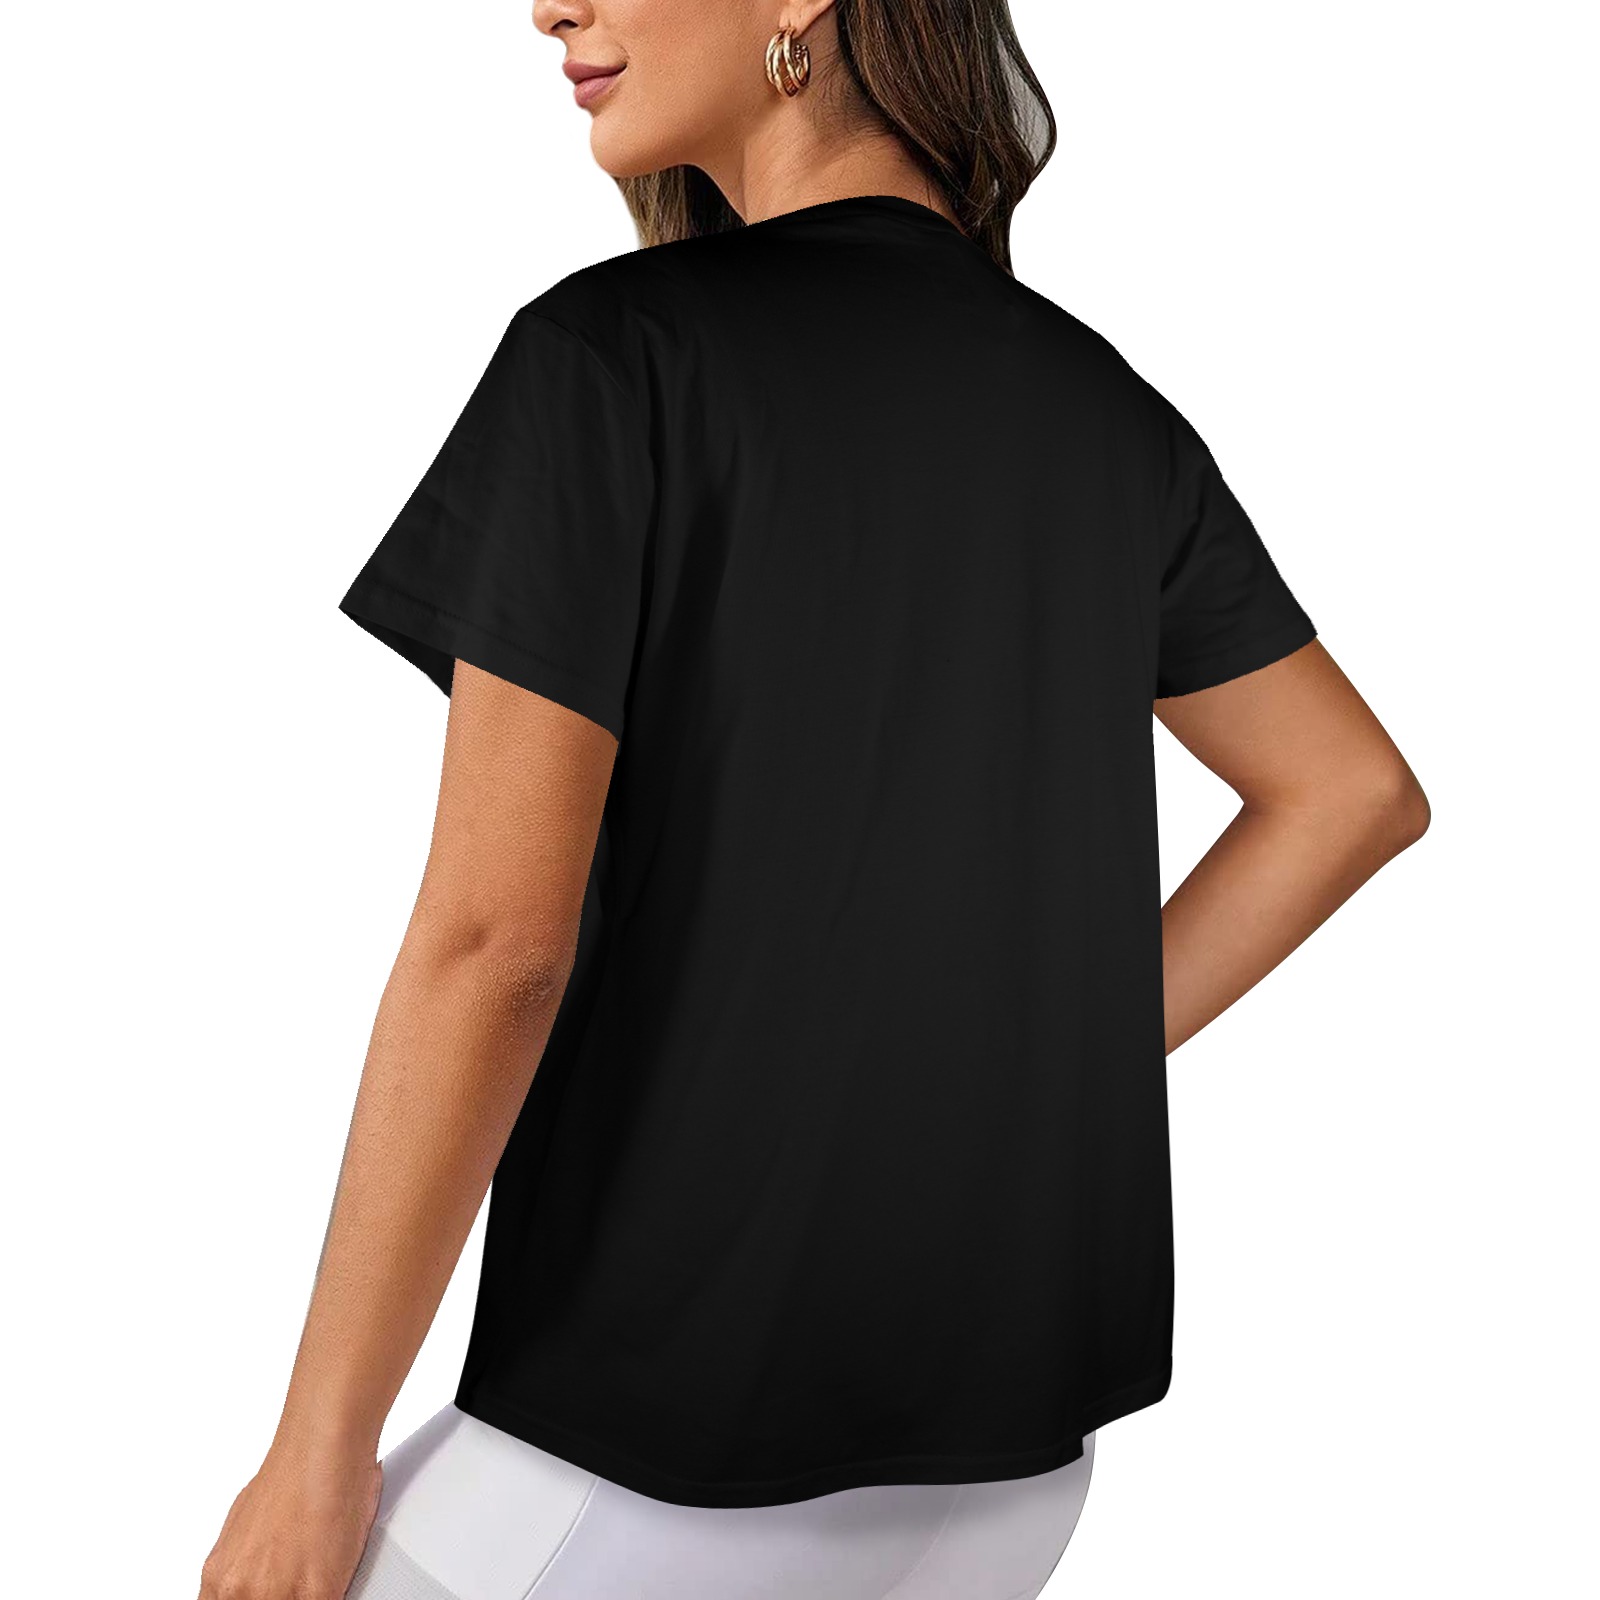 Jerusalem dechire rose Women's Glow in the Dark T-shirt (Front Printing)